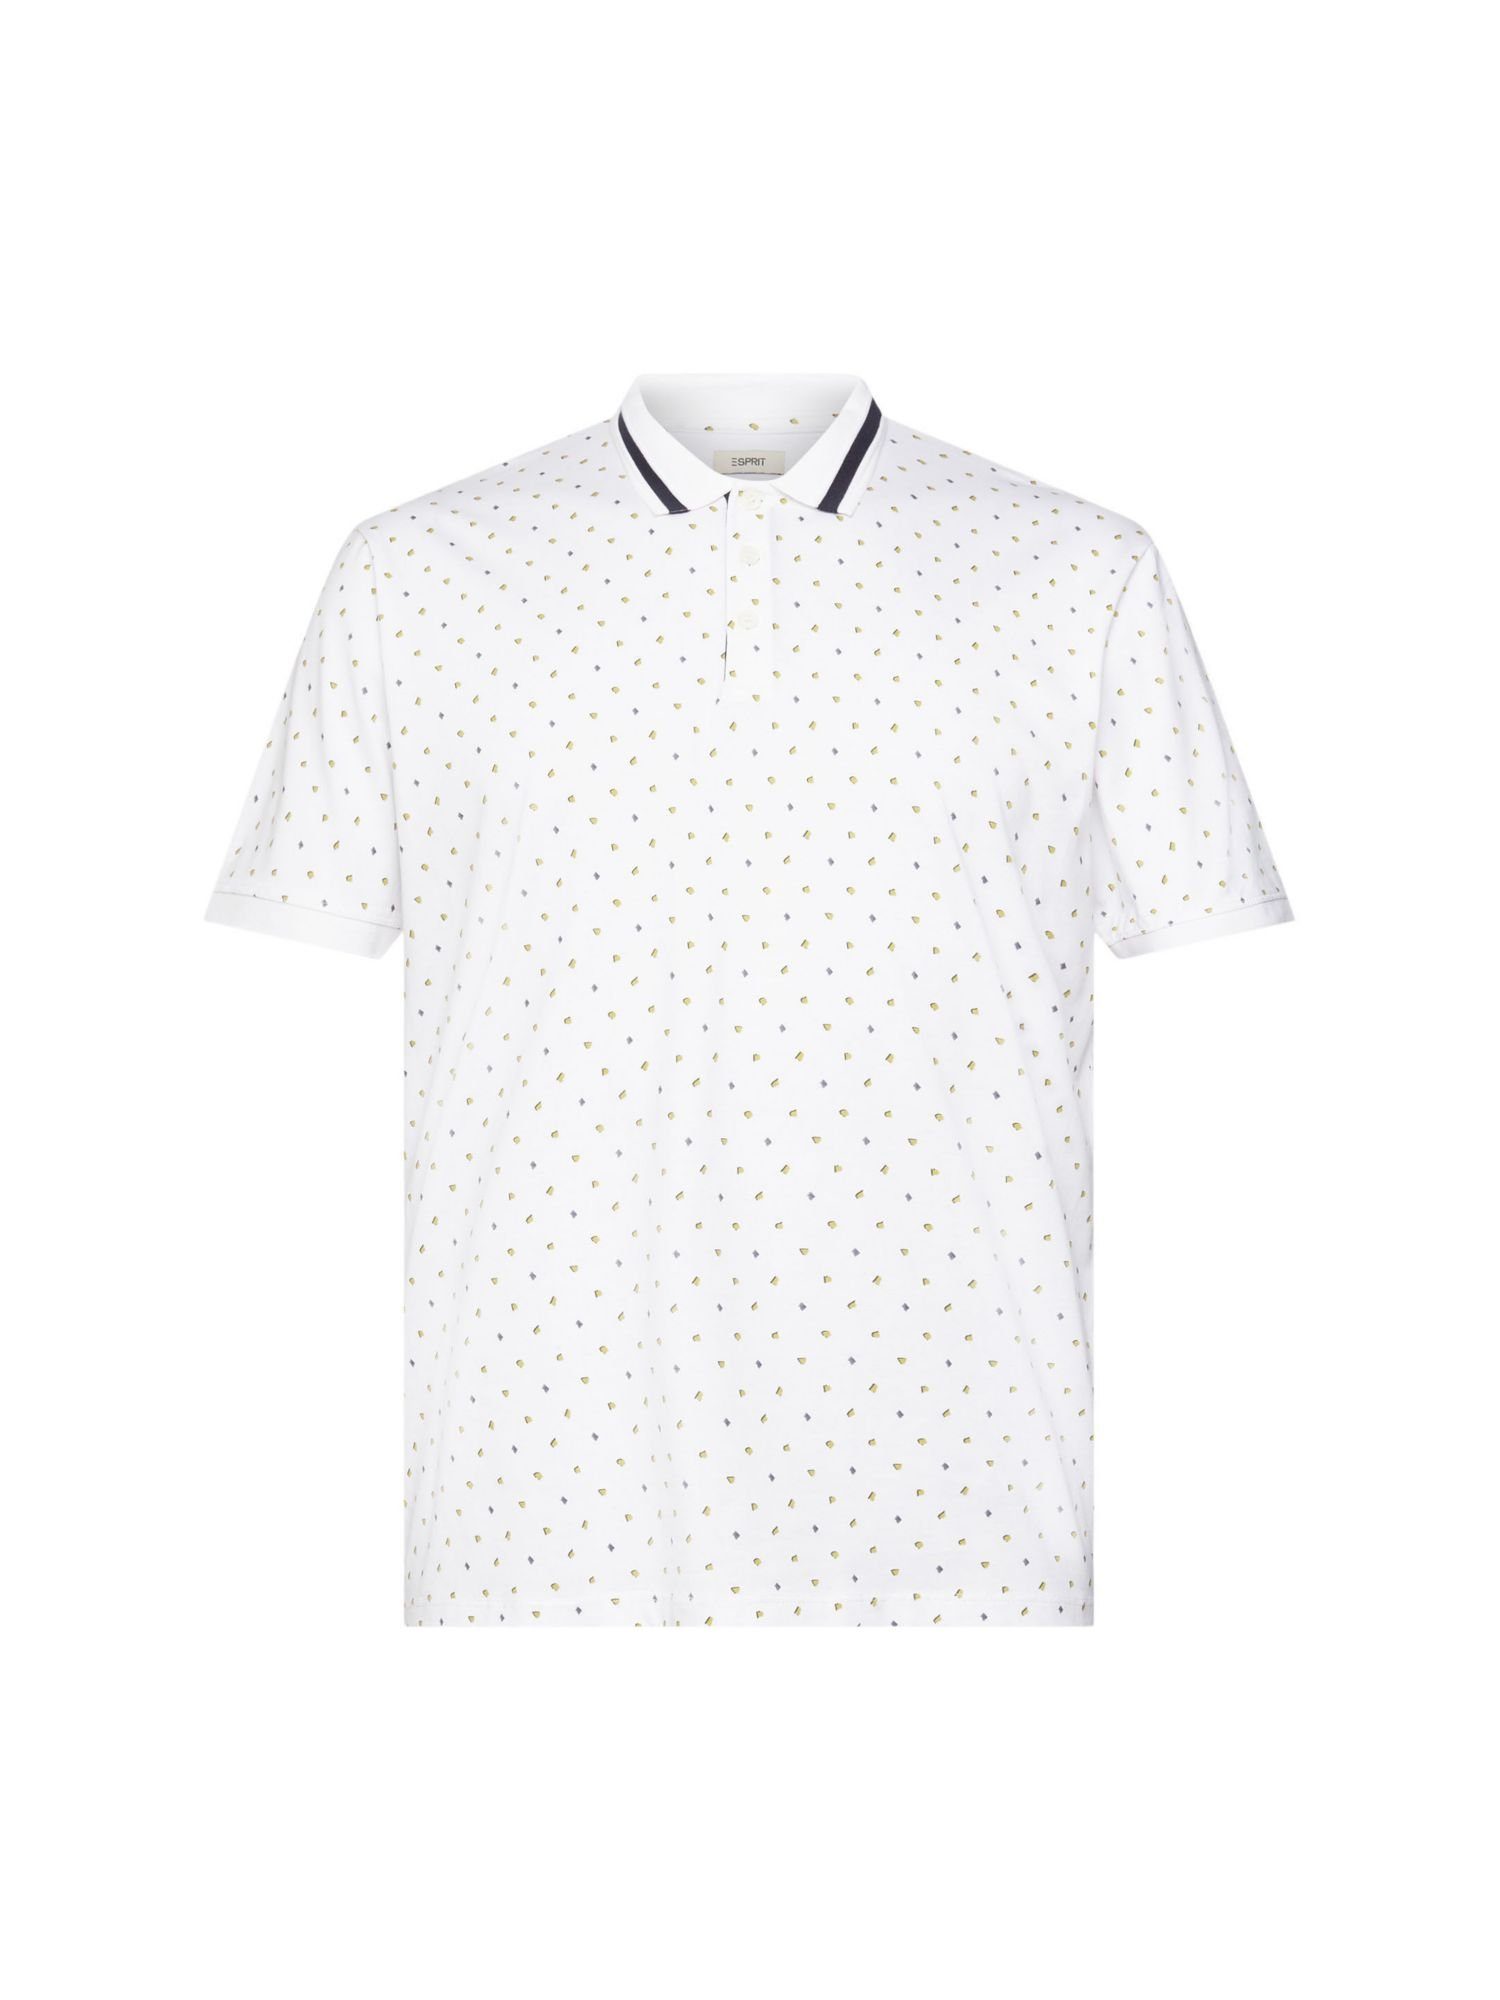 Poloshirt WHITE Allover-Muster OFF Esprit Poloshirt mit